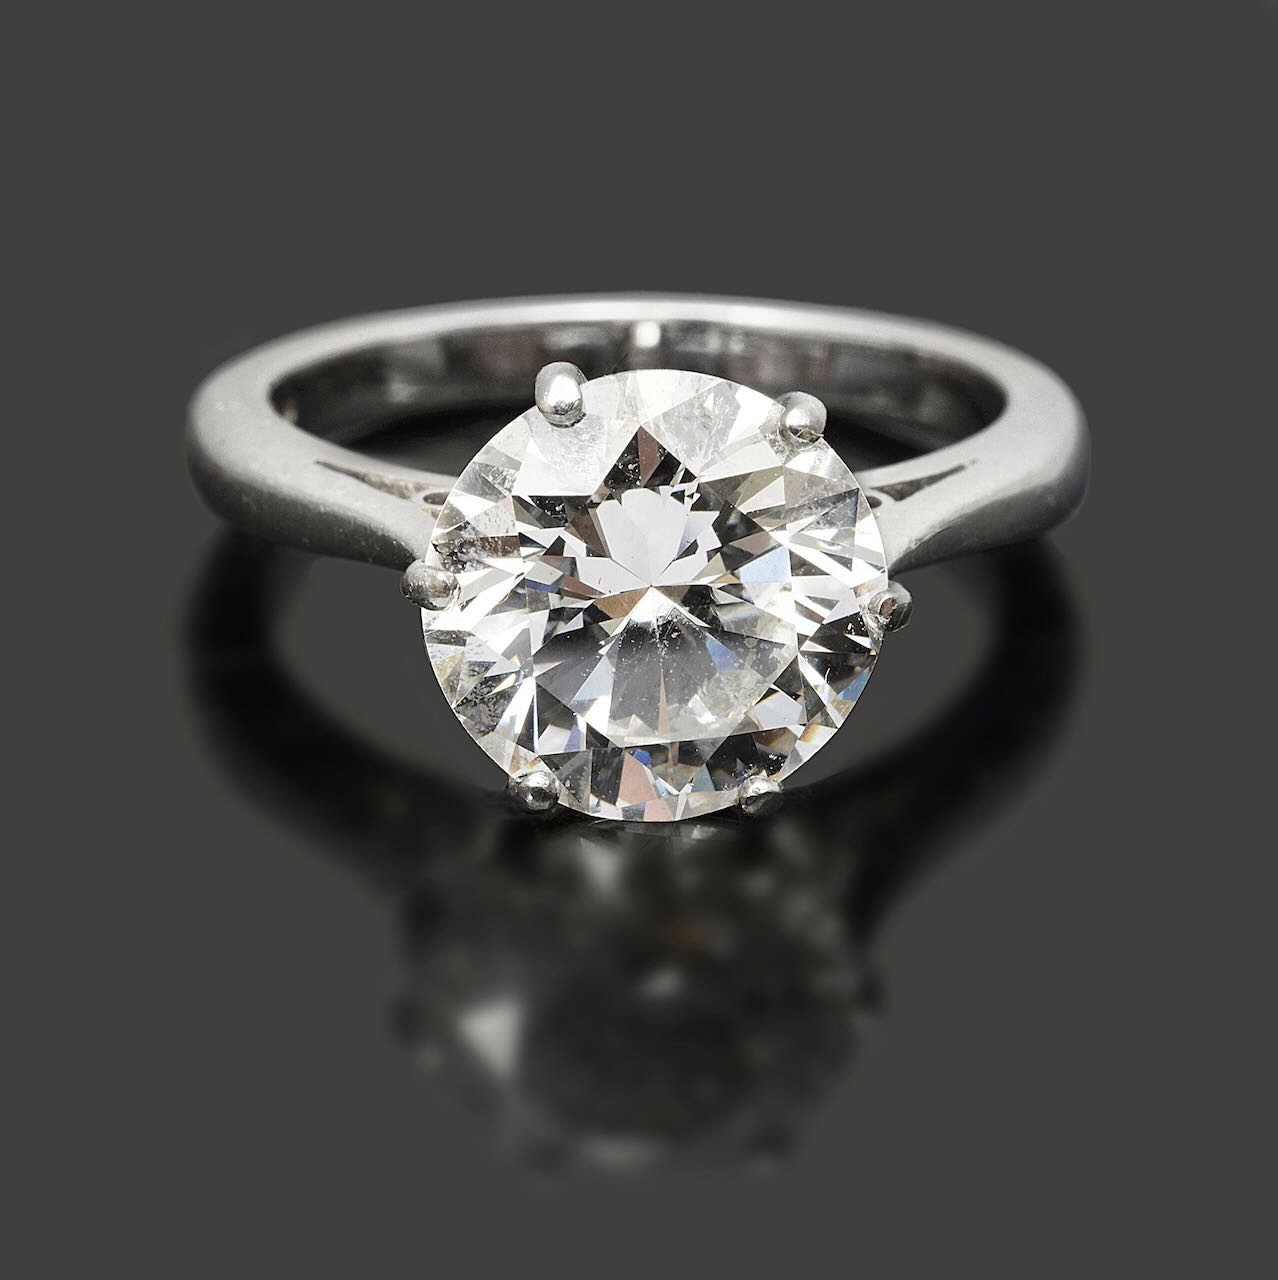 A 3.12ct diamond single stone ring